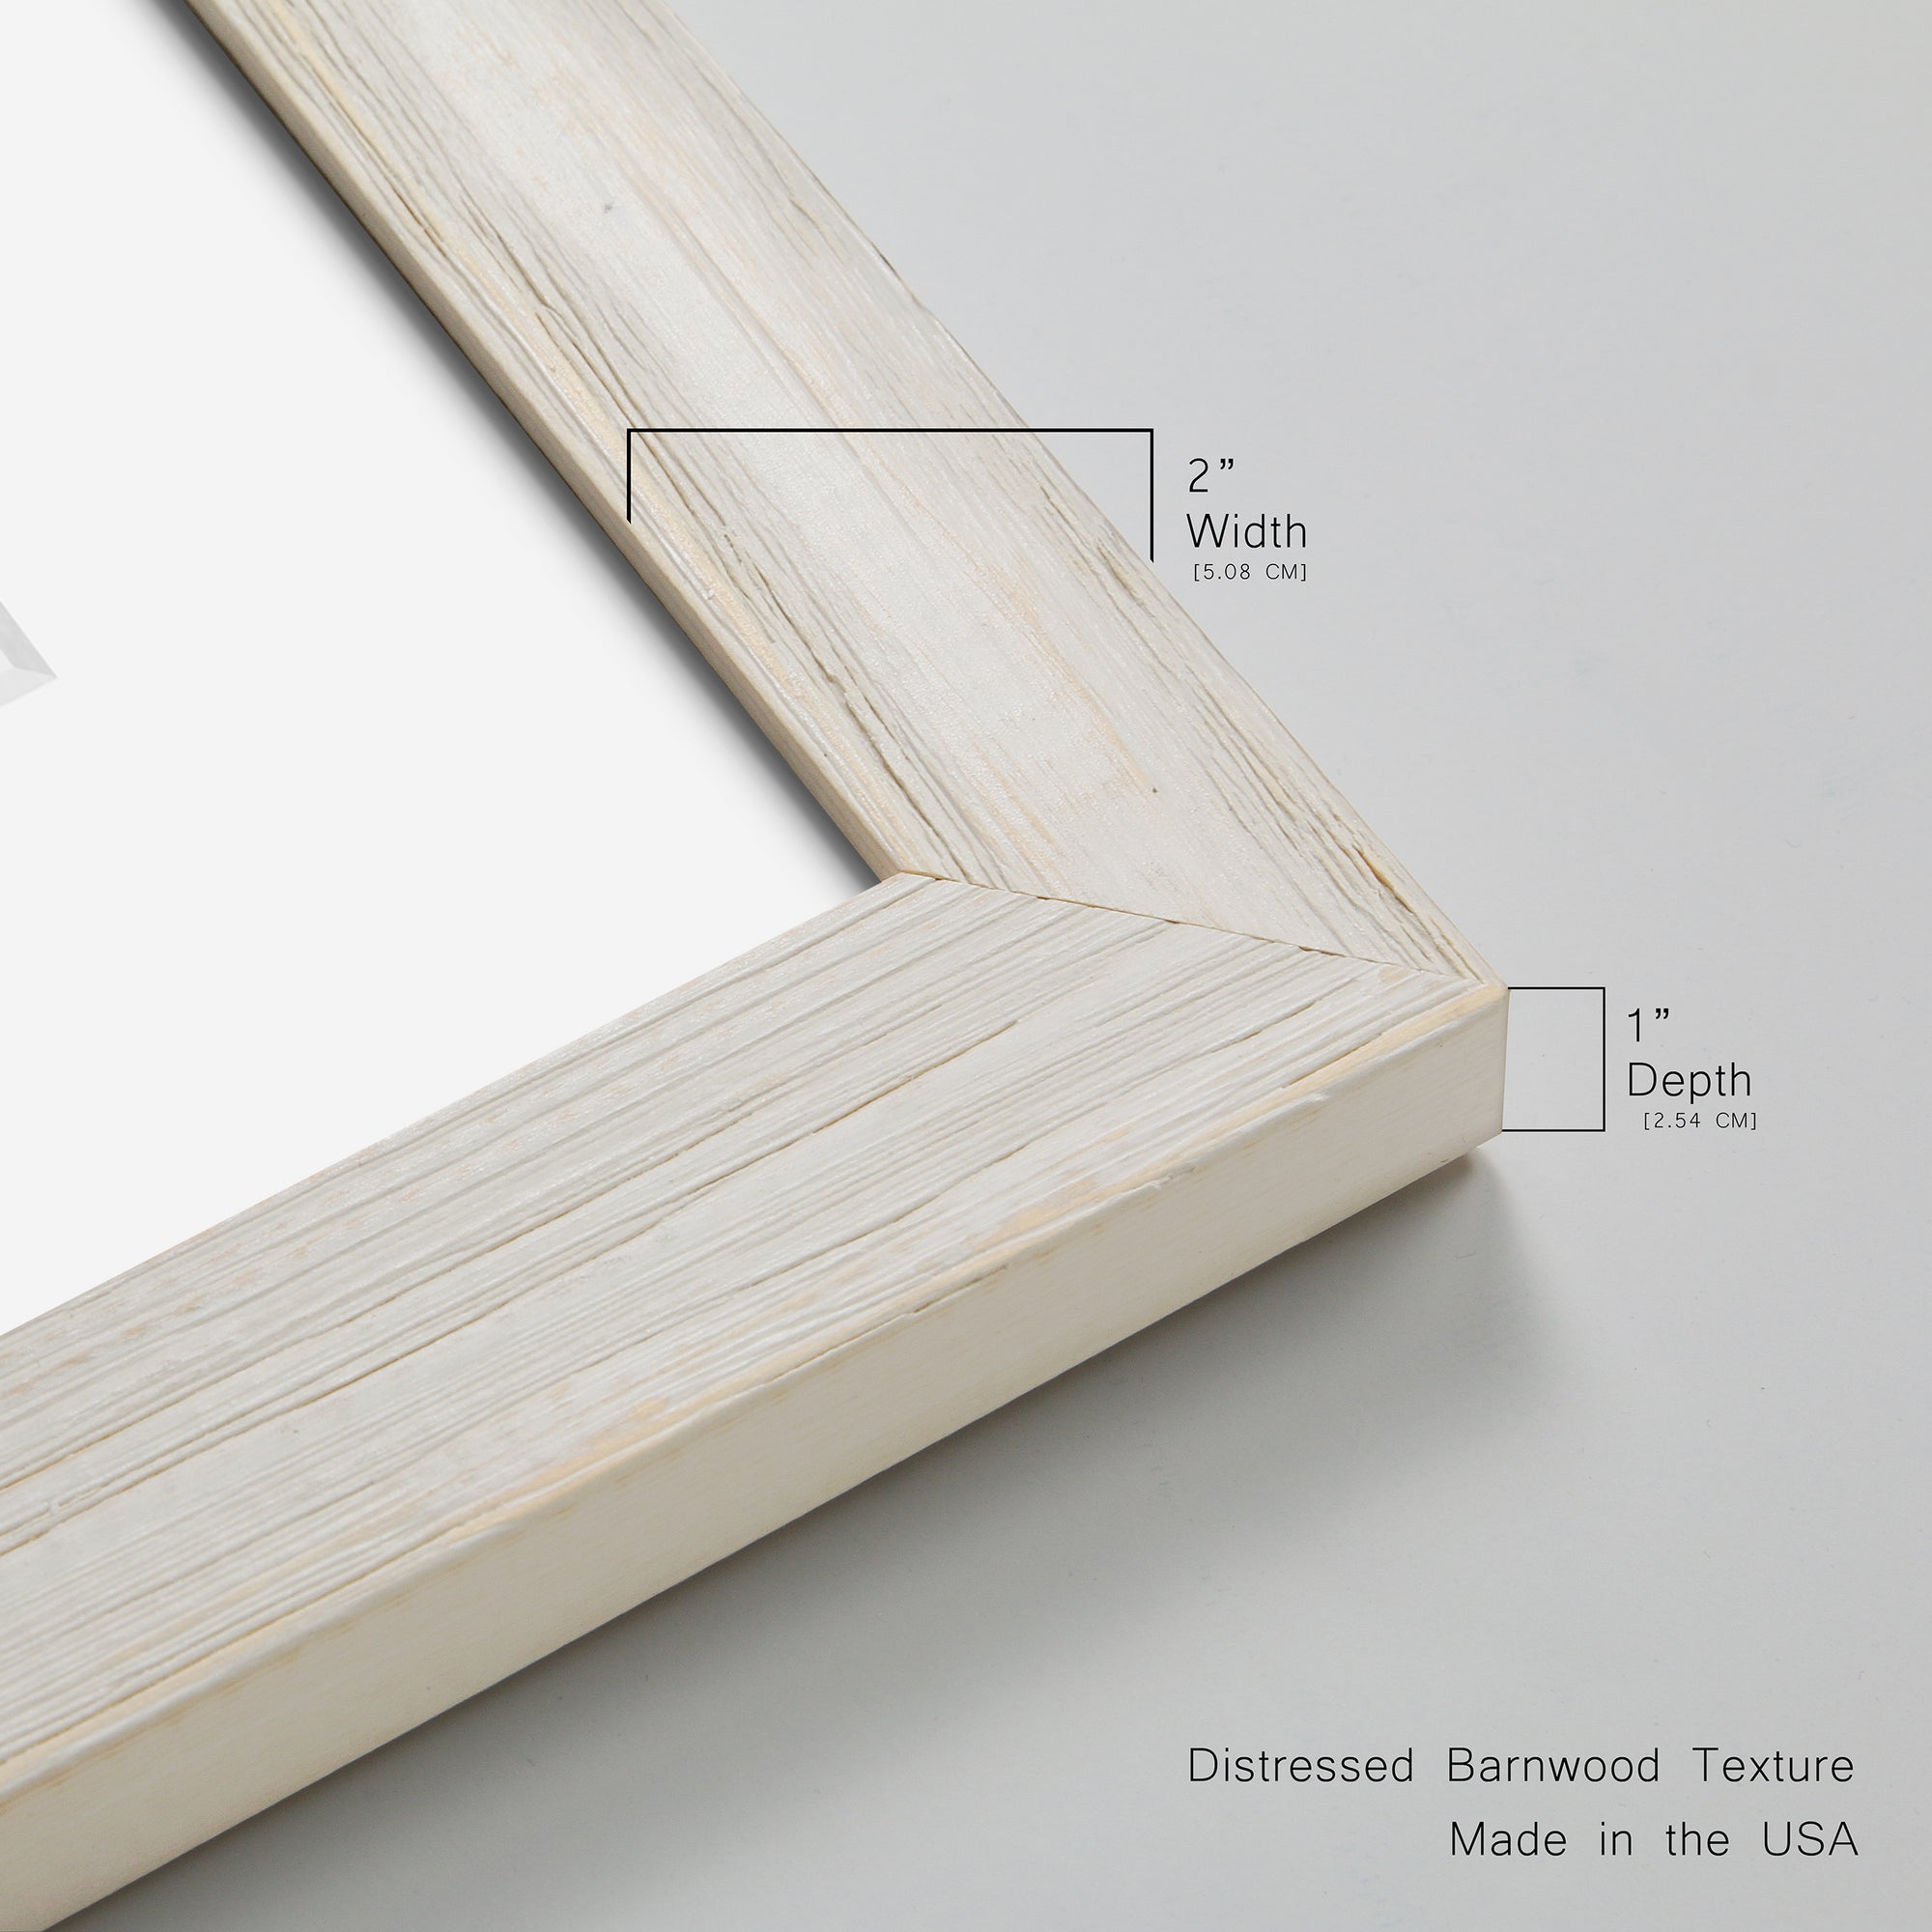 Evergreen Perch-Premium Framed Print - Ready to Hang